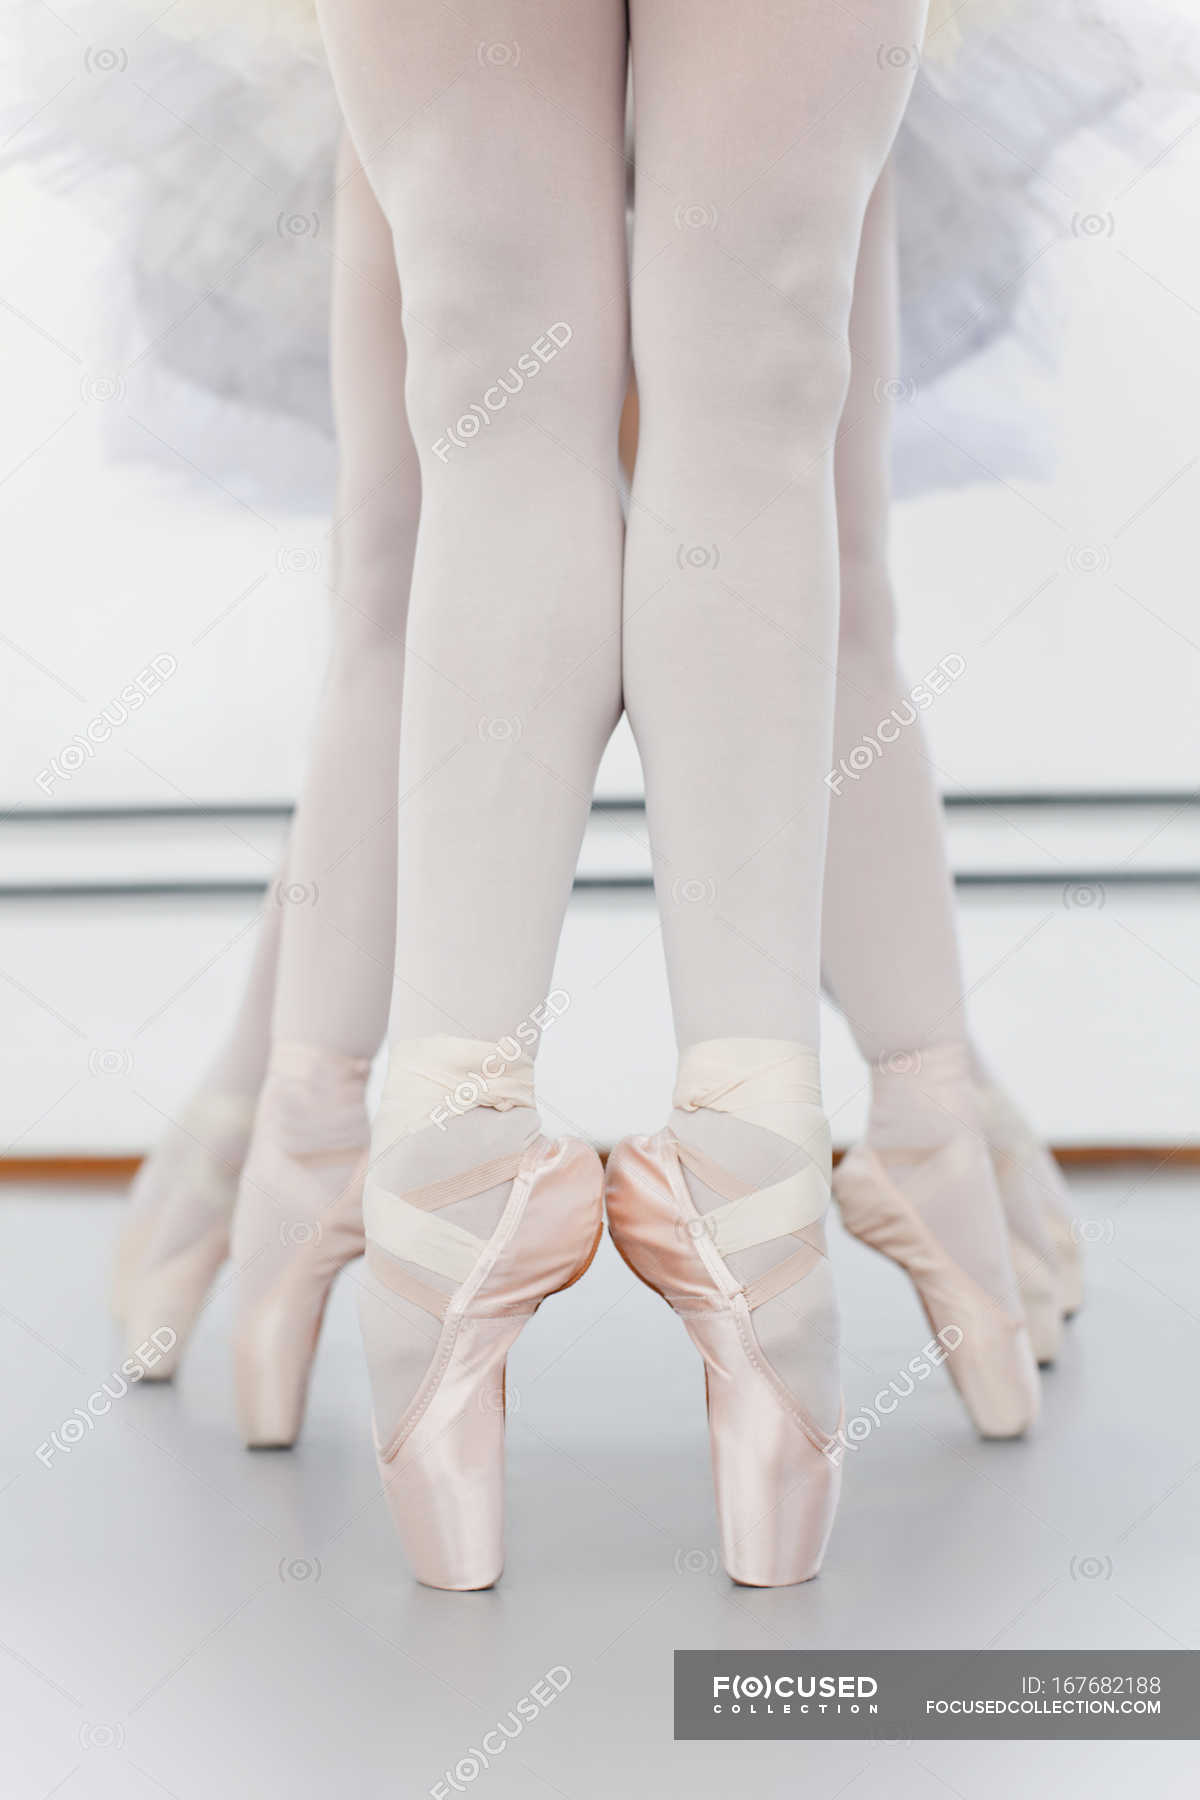 ballerina feet in pointe shoes